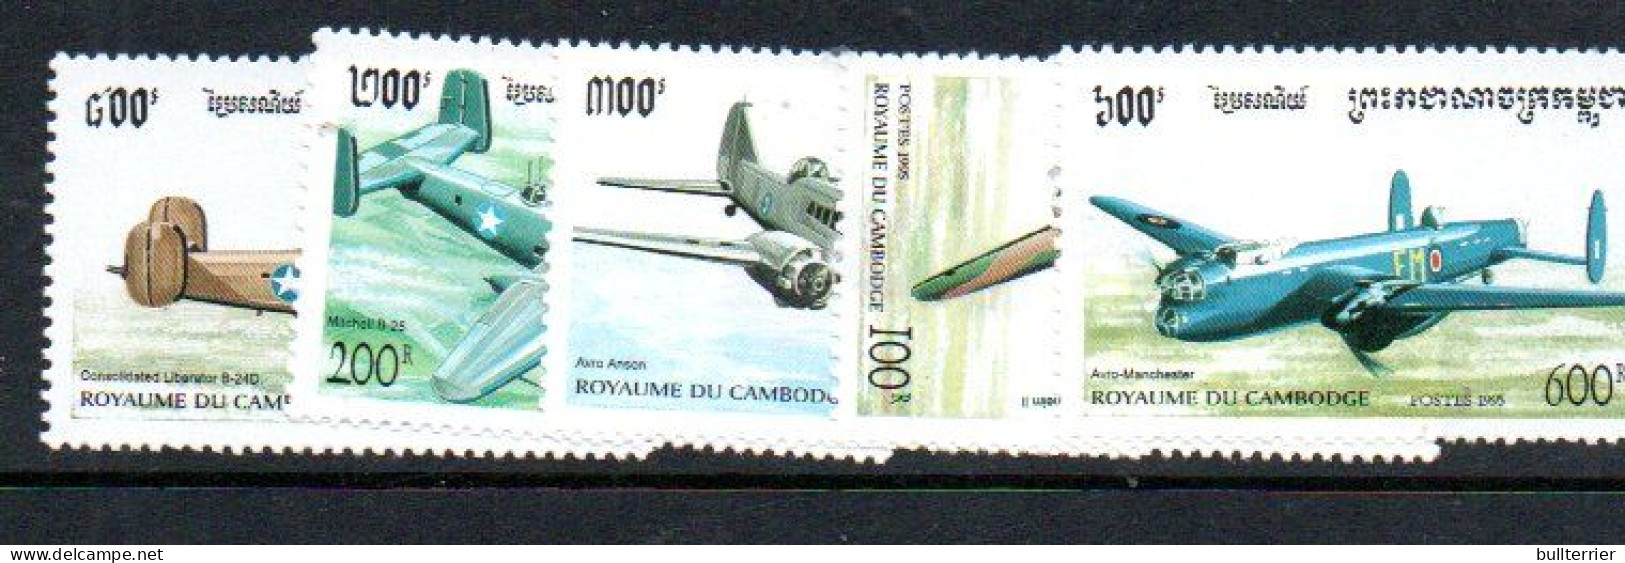 CAMBODIA - 1995 - WARPLANES SET OF 5  MINT NEVER HINGED - Cambodge